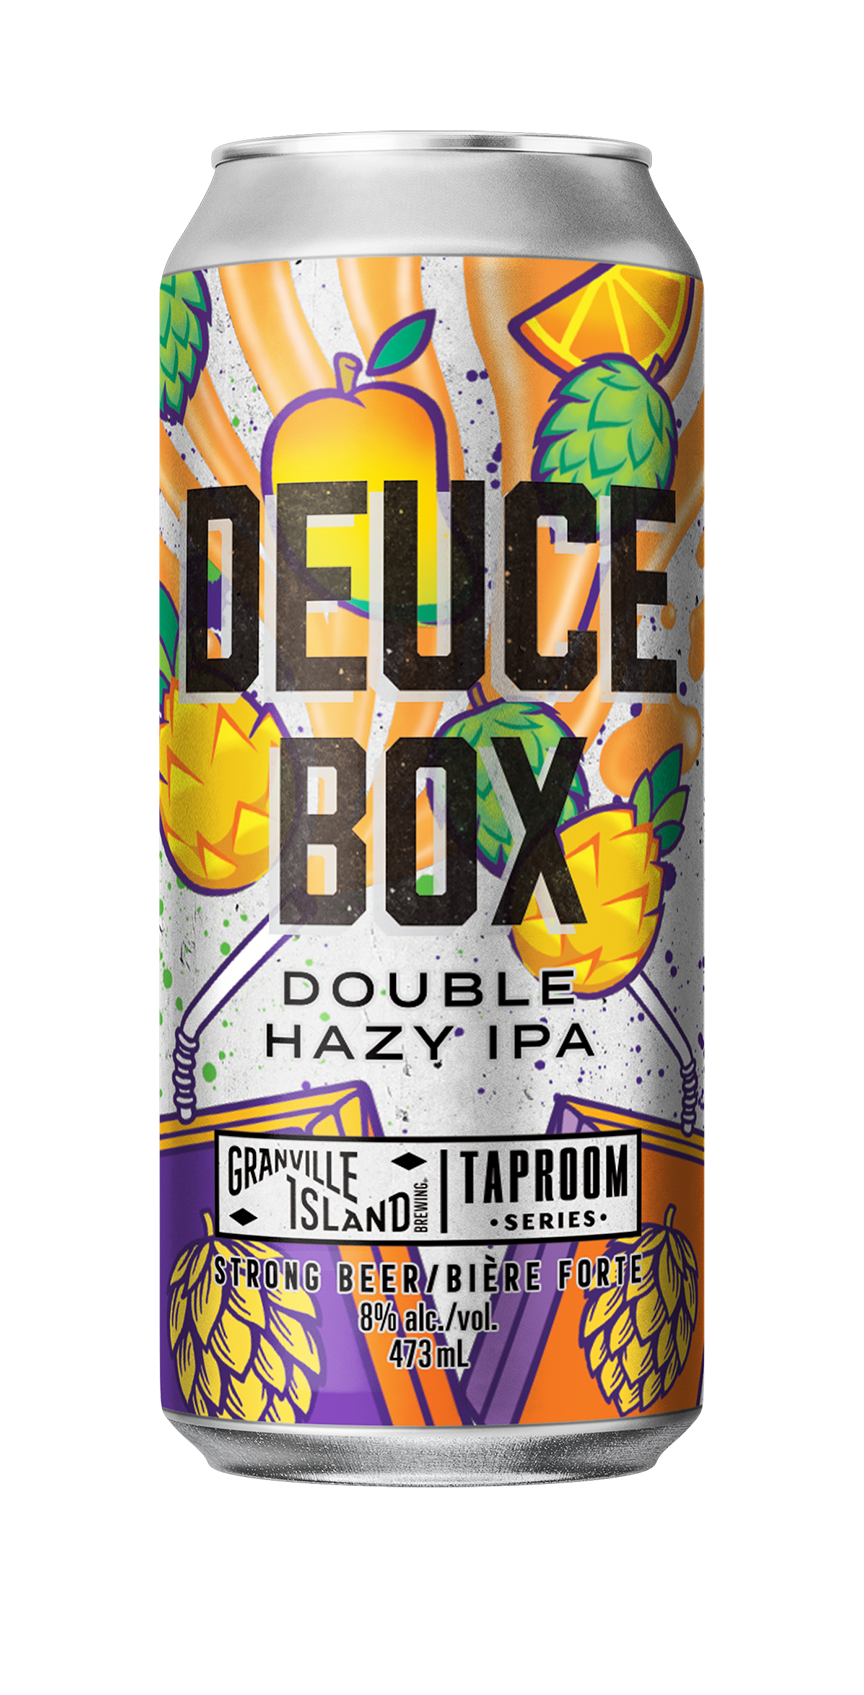 Deucebox Double Hazy IPA can